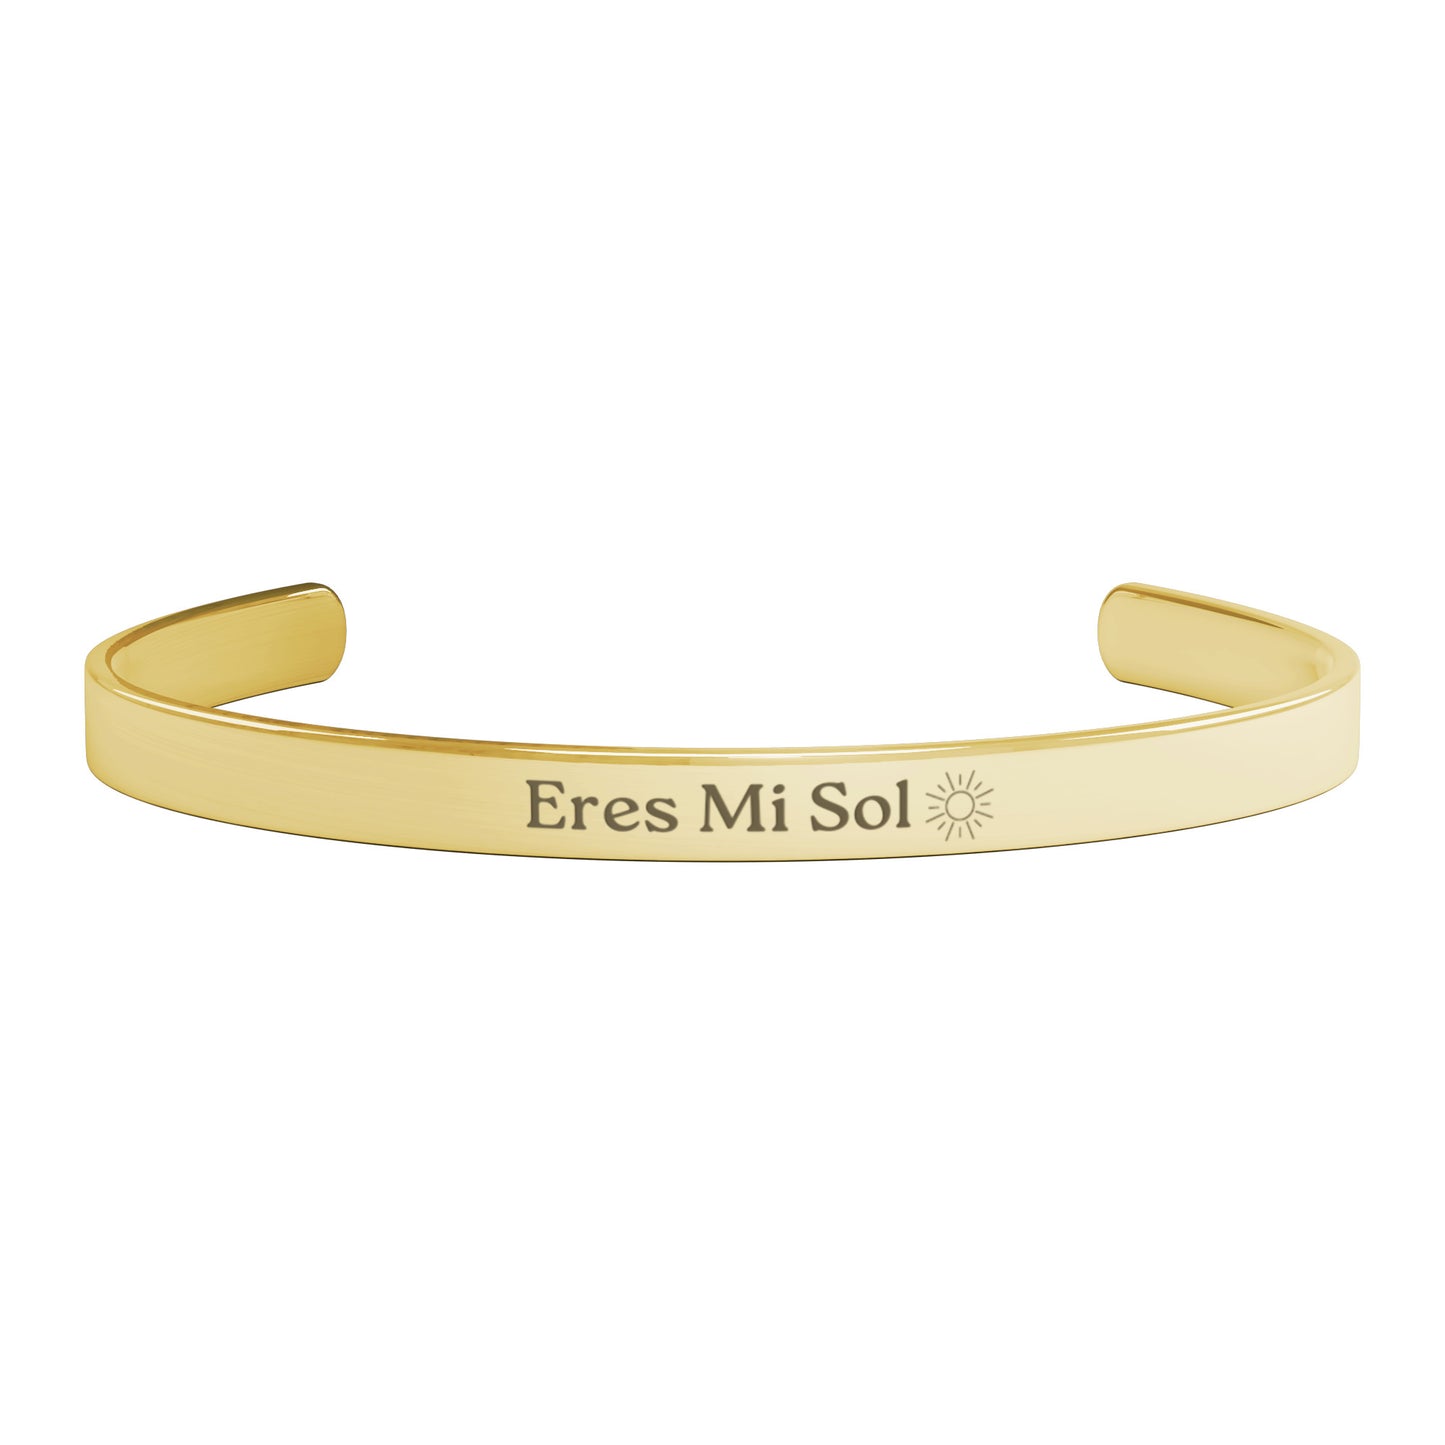 ERES MI SOL (Spanish - You are my sun)